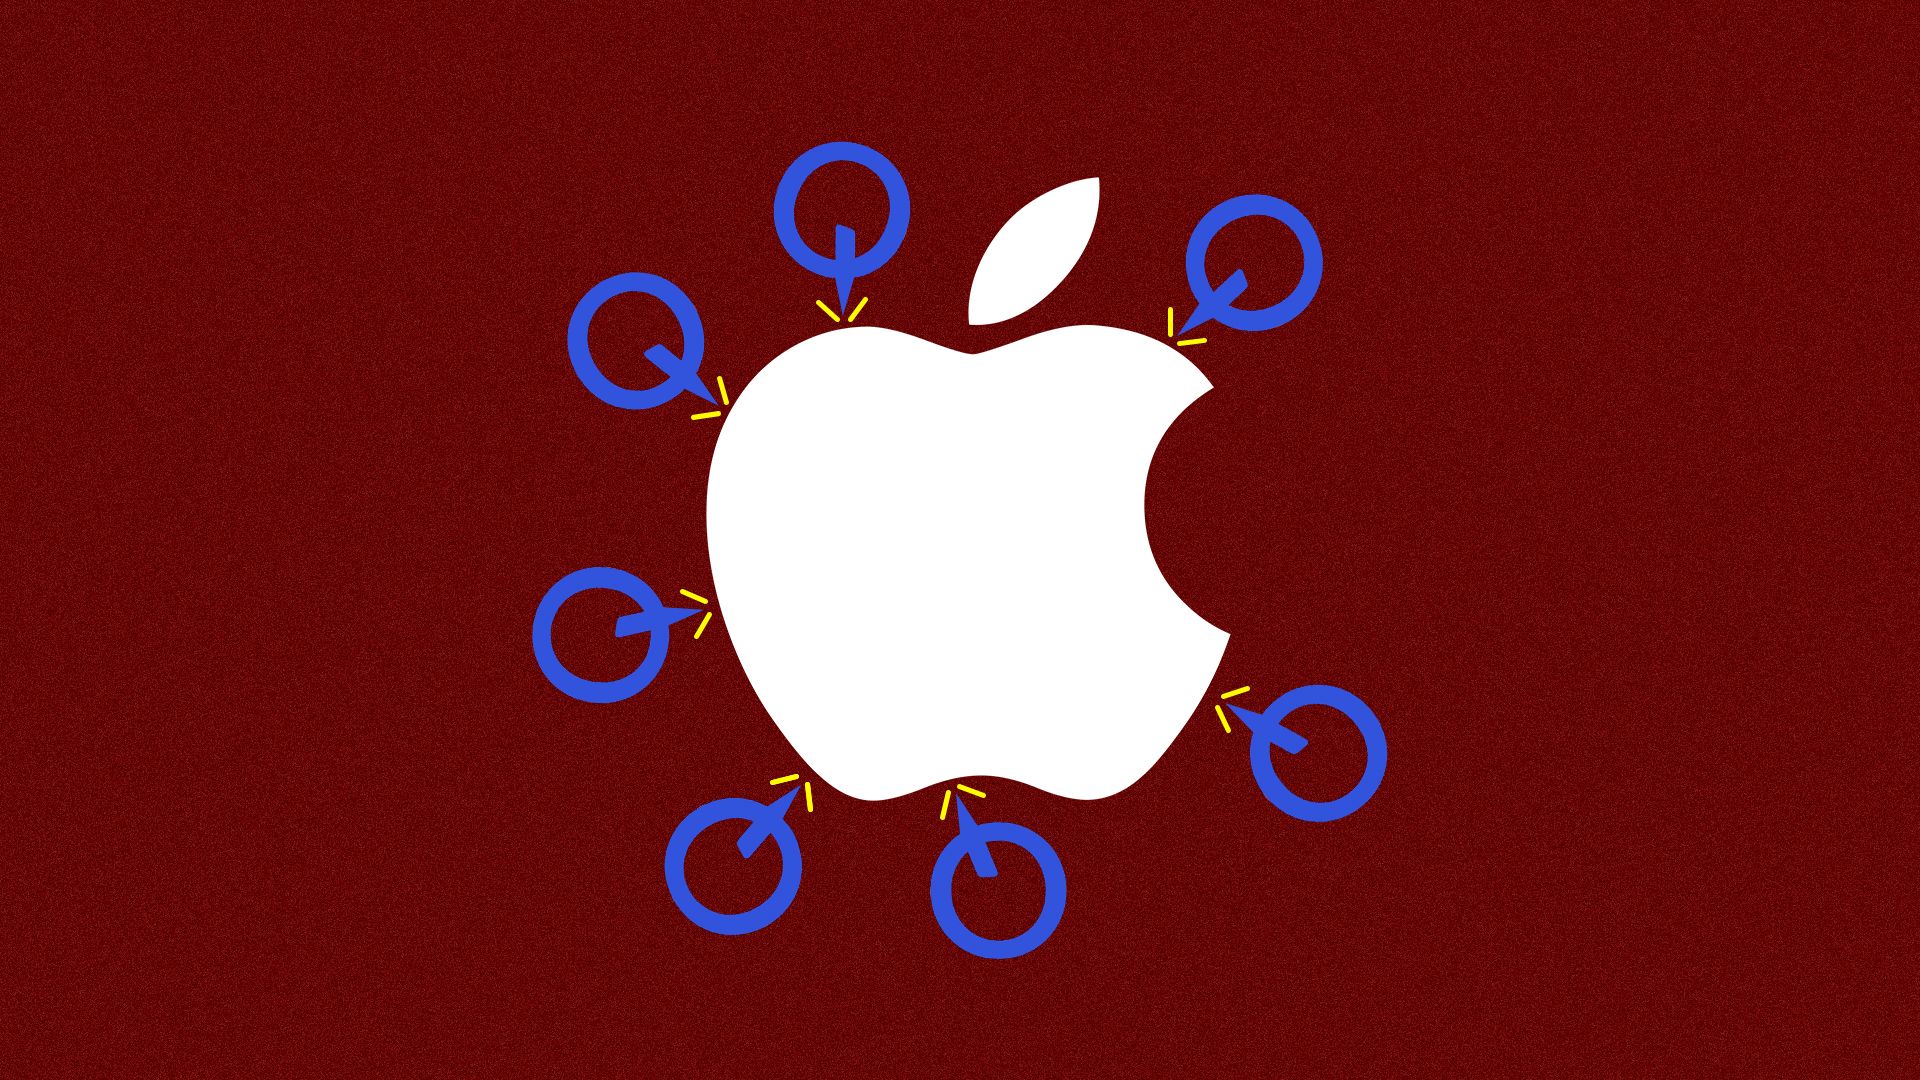 Qualcomm logos attacking Apple logo